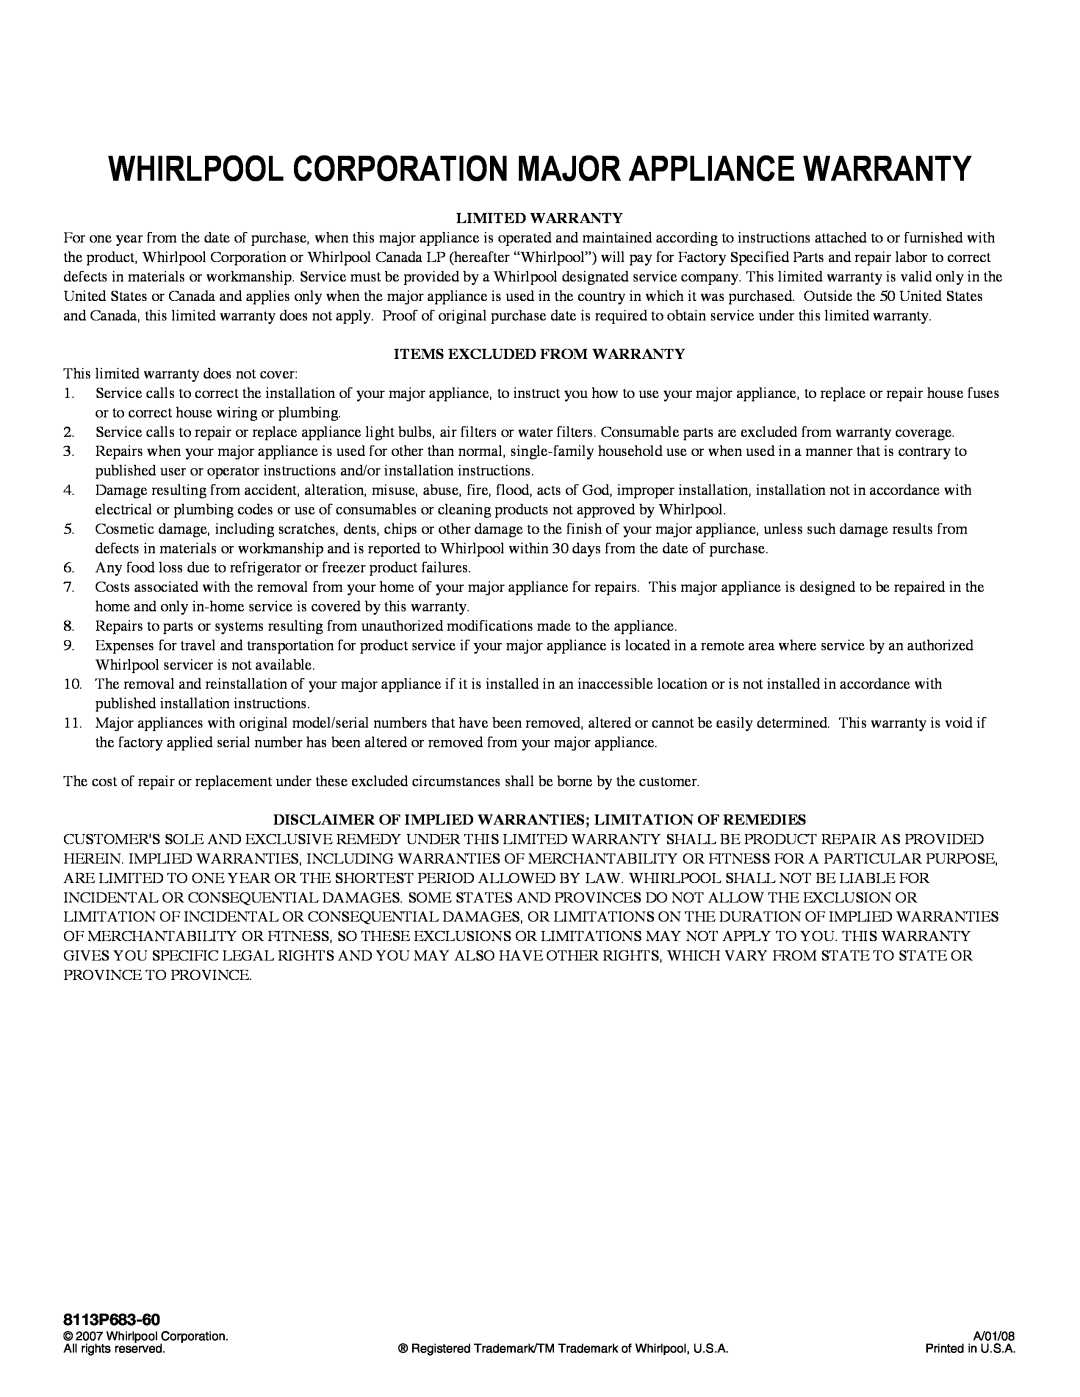 Whirlpool RF301OXT manual Whirlpool Corporation Major Appliance Warranty, Limited Warranty, Items Excluded From Warranty 